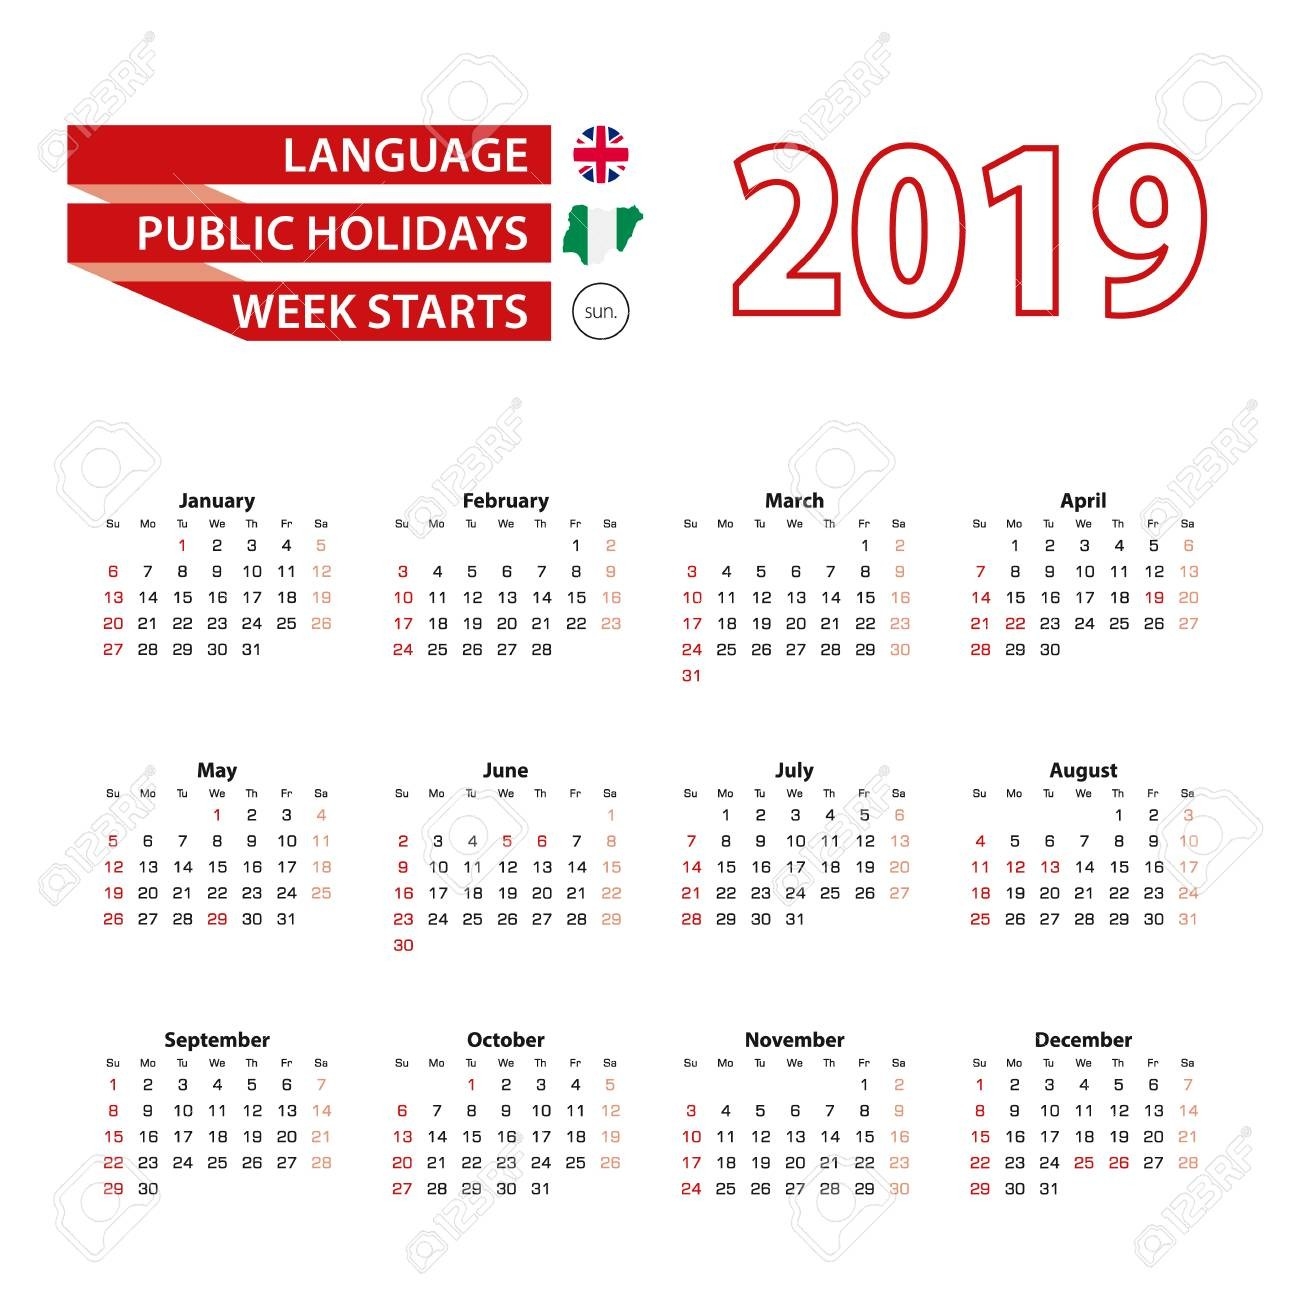 Calendar 2019 In English Language With Public Holidays The Country..-Calendar With Public Holidays